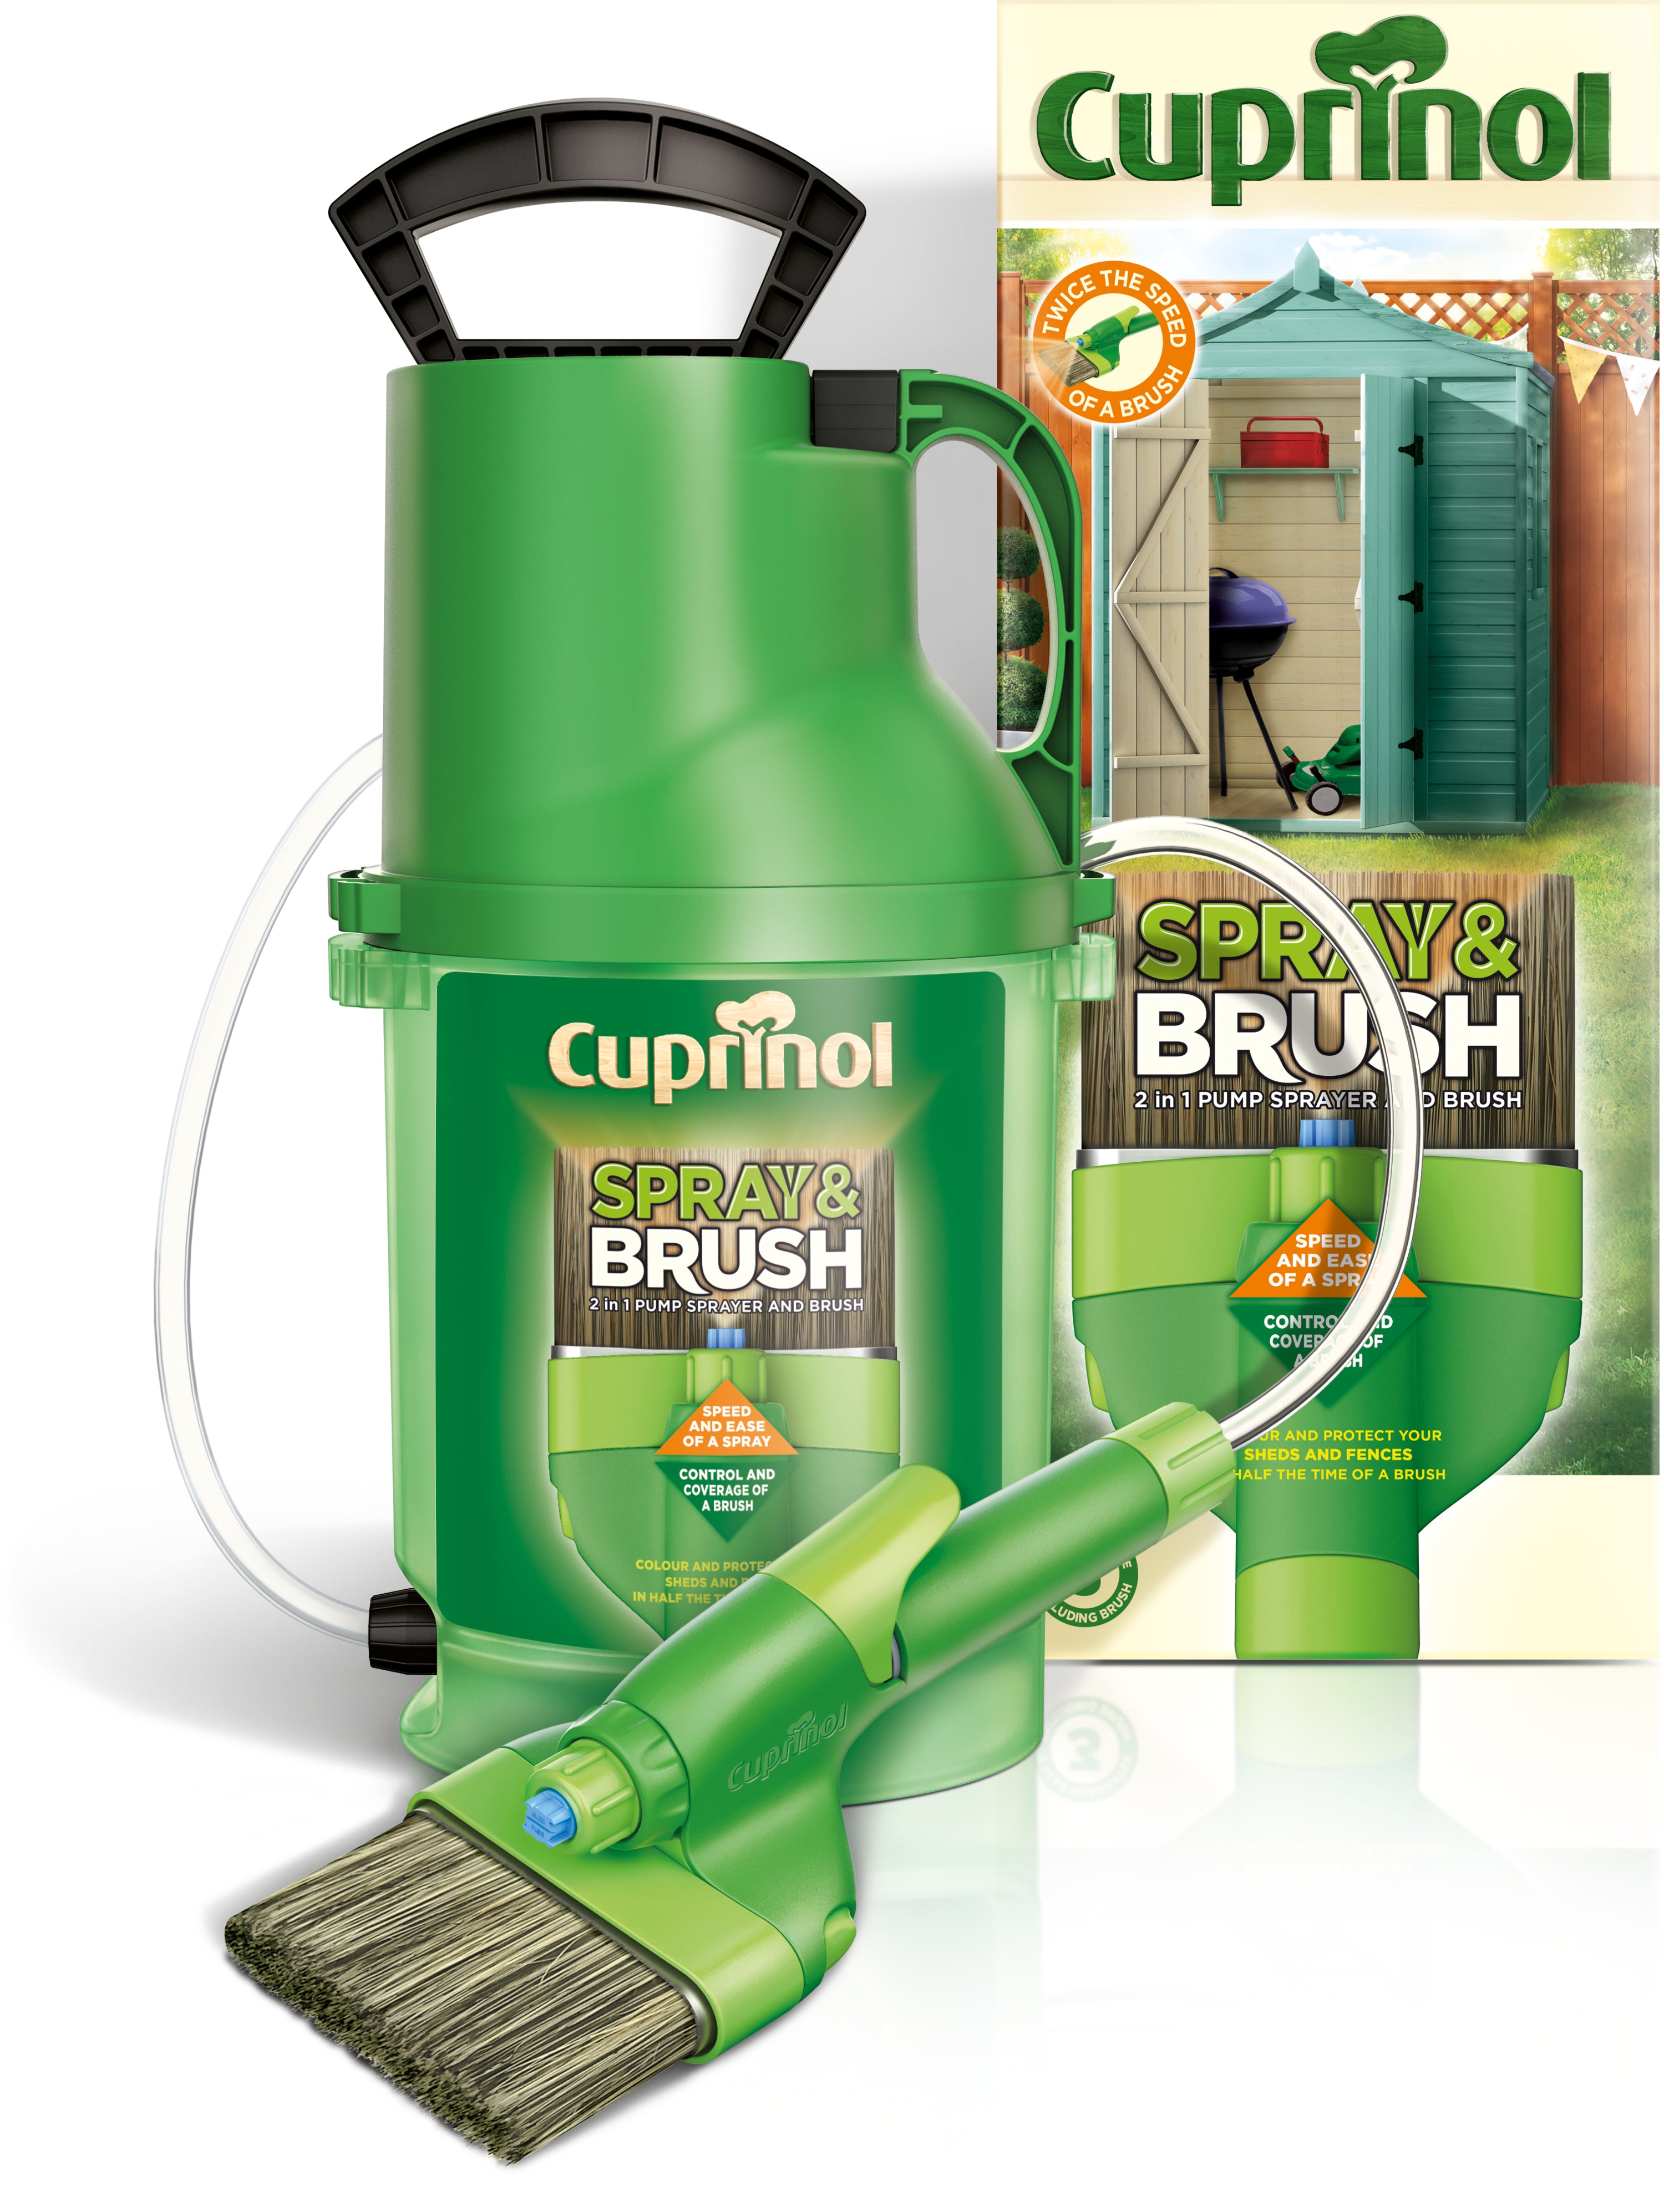 Cuprinol Spray & Brush 2 In 1 Pump Sprayer